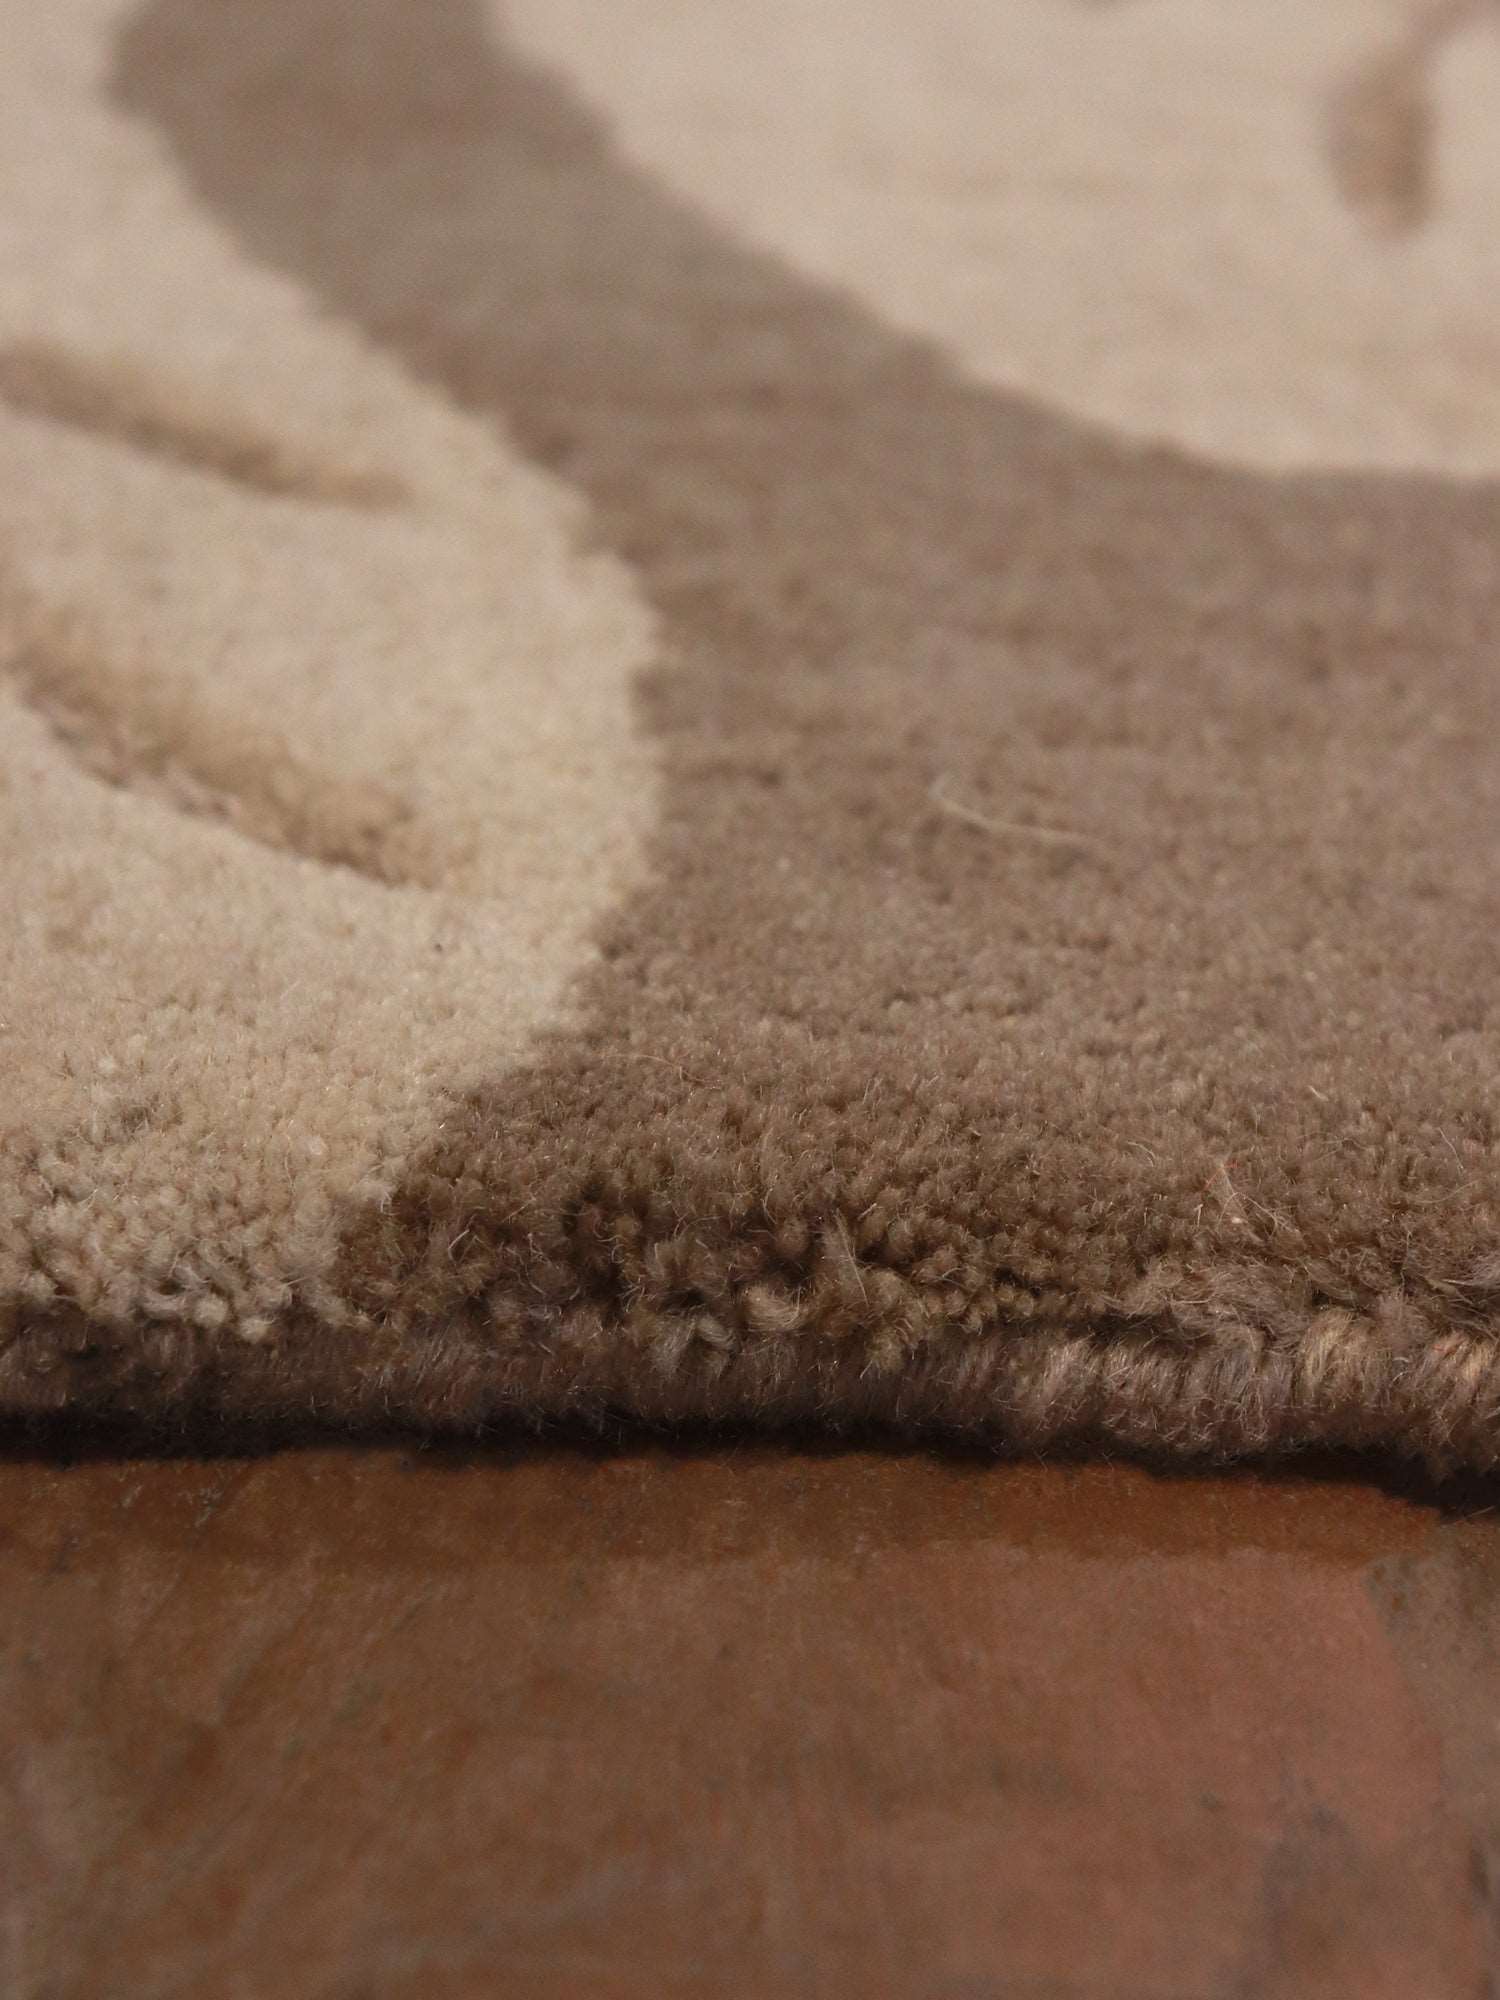 Carpet Hand Tufted 100% Woollen Floral Brown Grey - 4 X 6 Feet